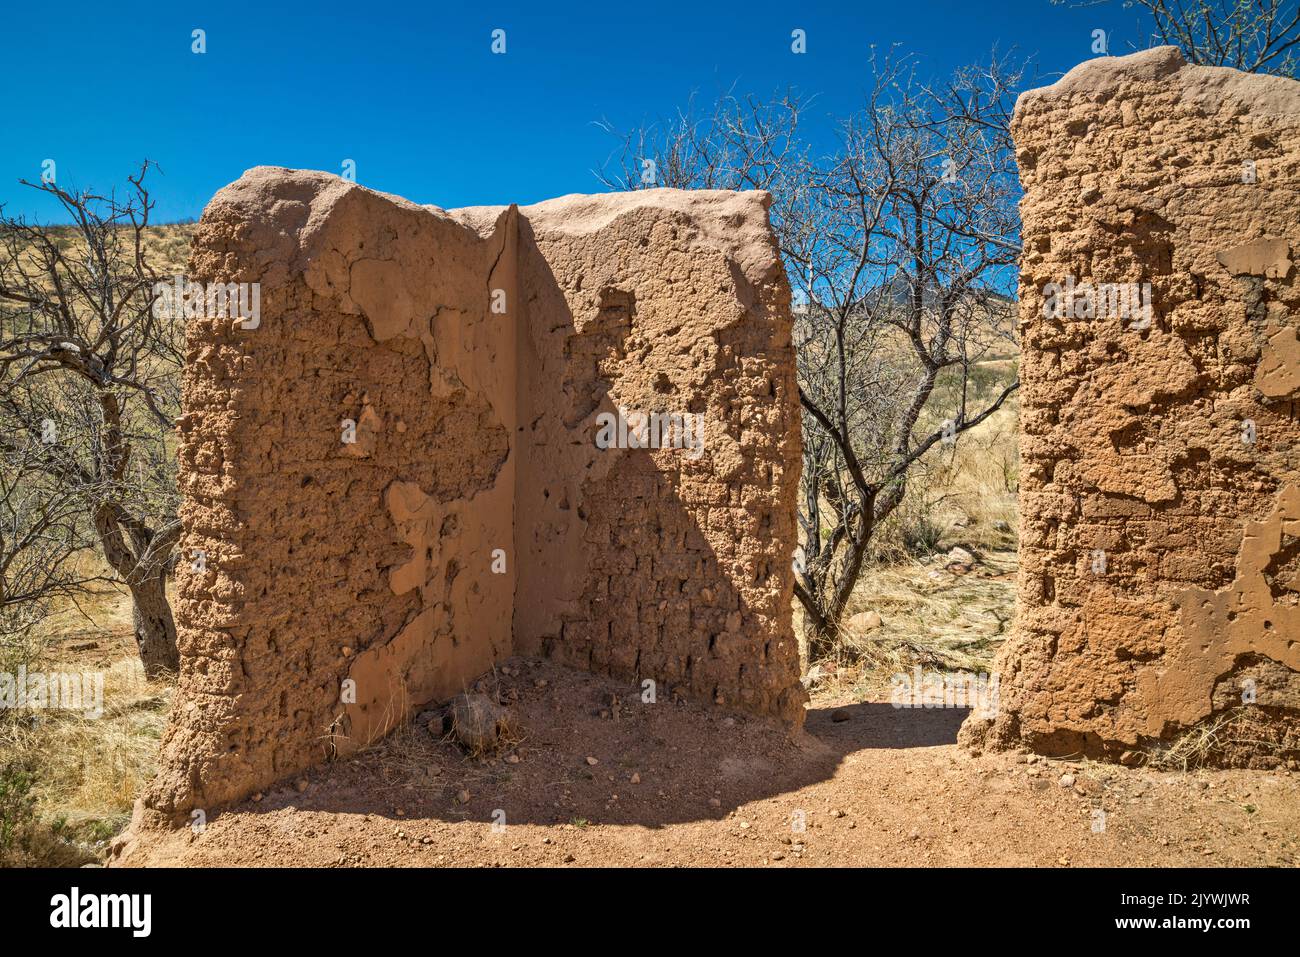 Adobe ruins at Alto Camp, Bond Canyon, Salero Road (Forest Road 143), Santa Rita Mountains, Coronado National Forest, Arizona, USA Stock Photo